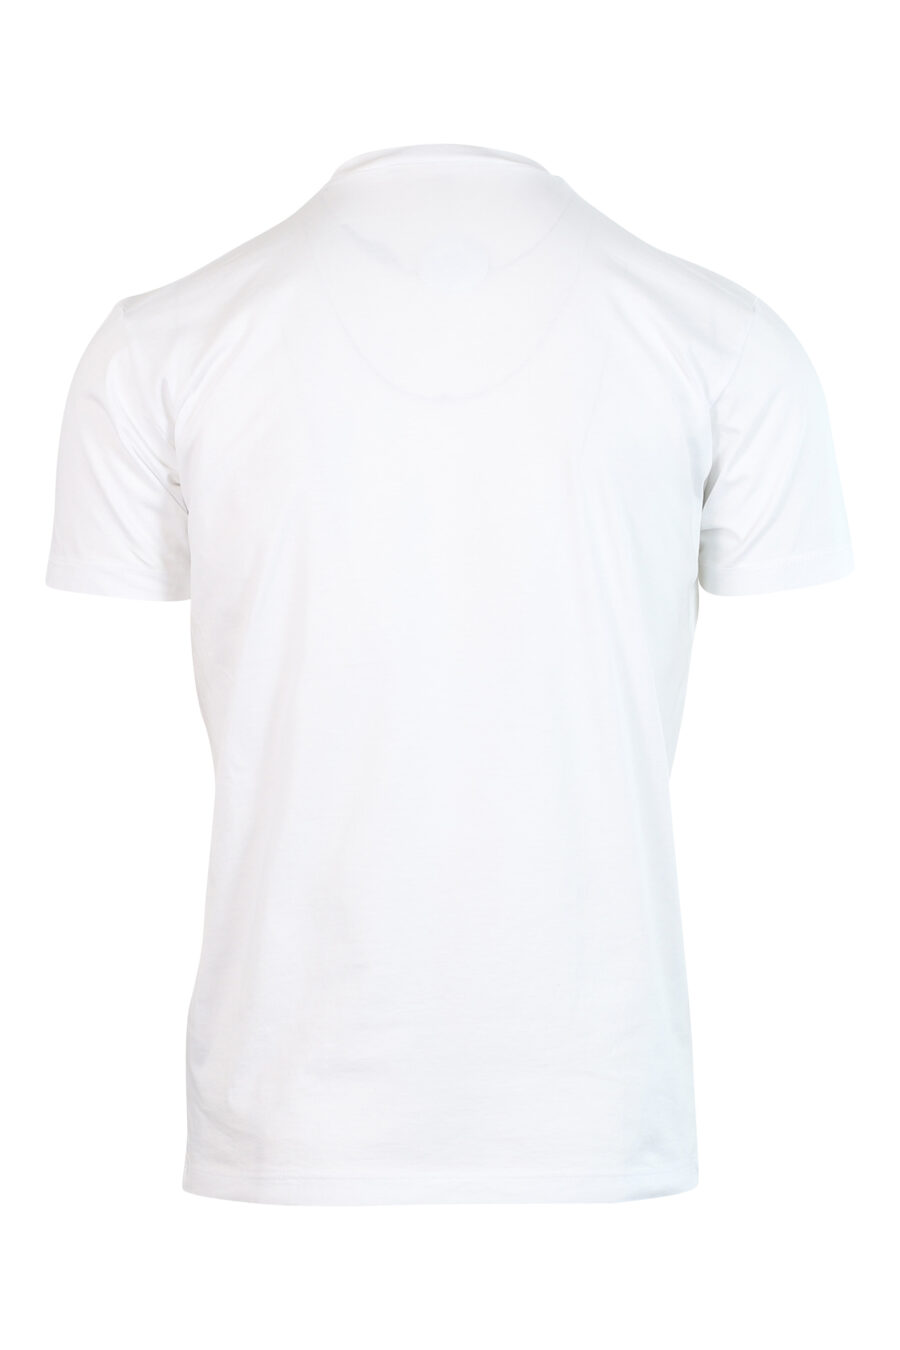 Camiseta blanca con logo "sweat and tears" - 8058049696083 2